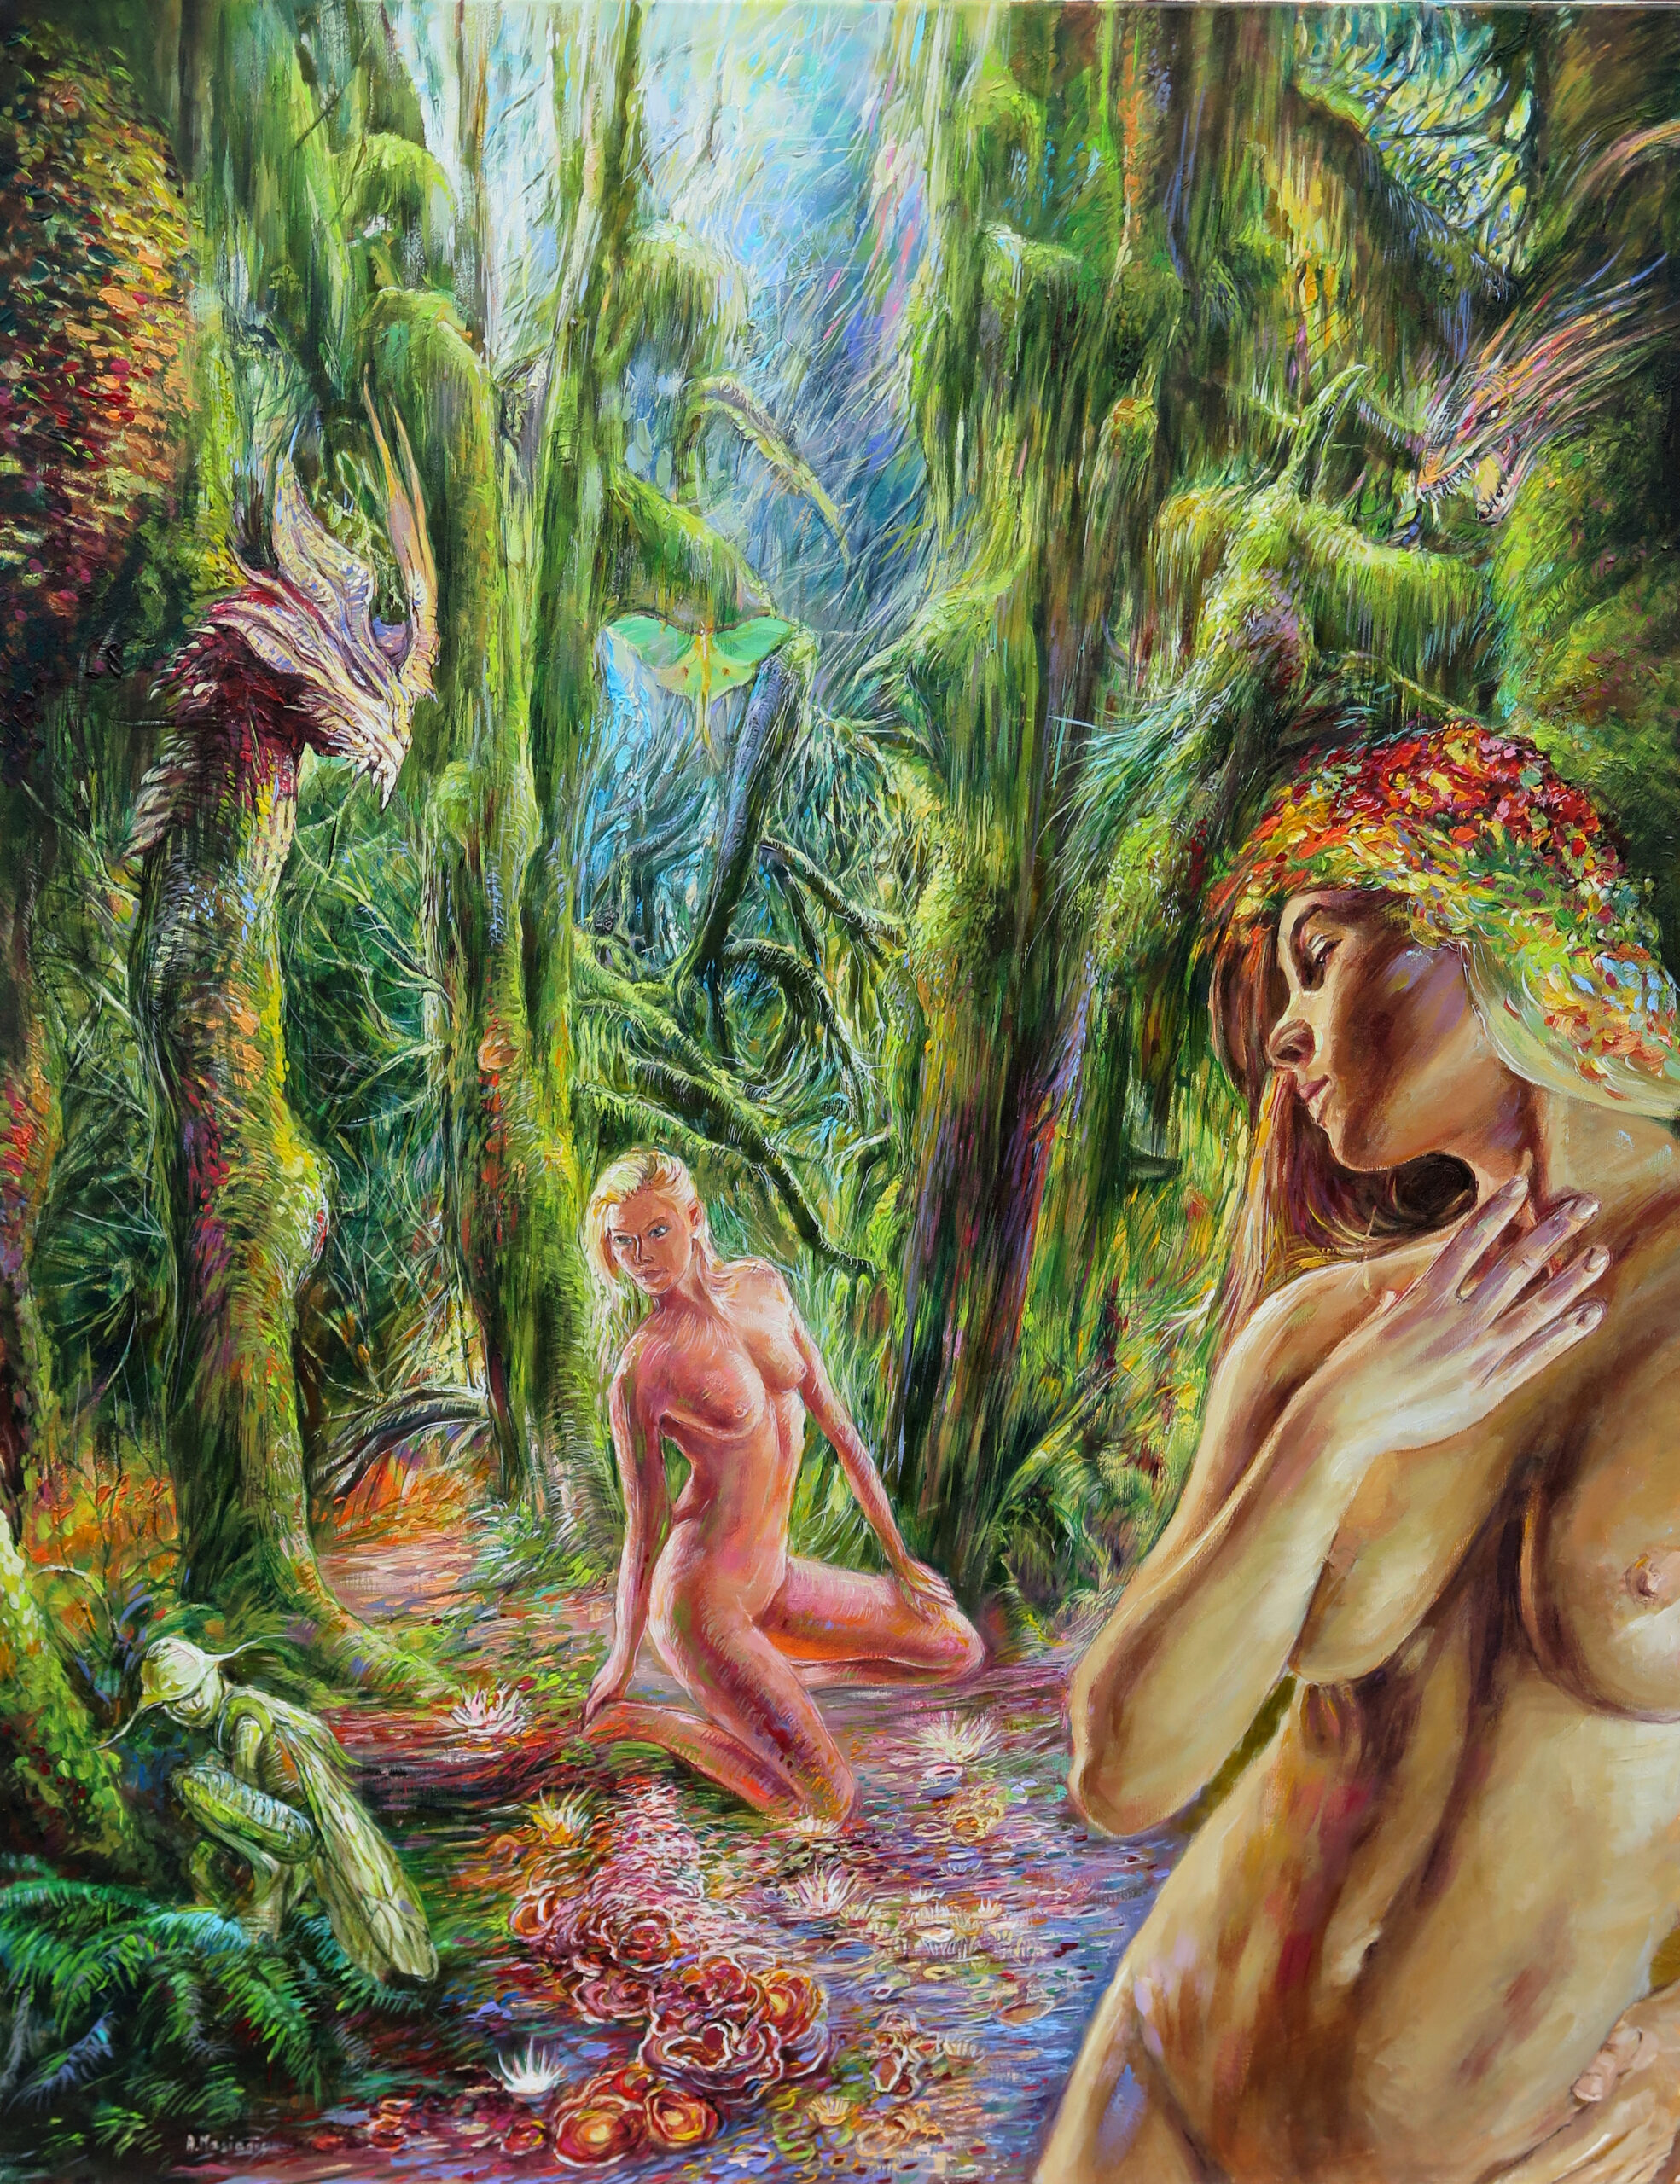 Lilith i Ewa akryl na płótnie 90/70 cm Lilith and Eve acrylic on canvas 90/70 cm.